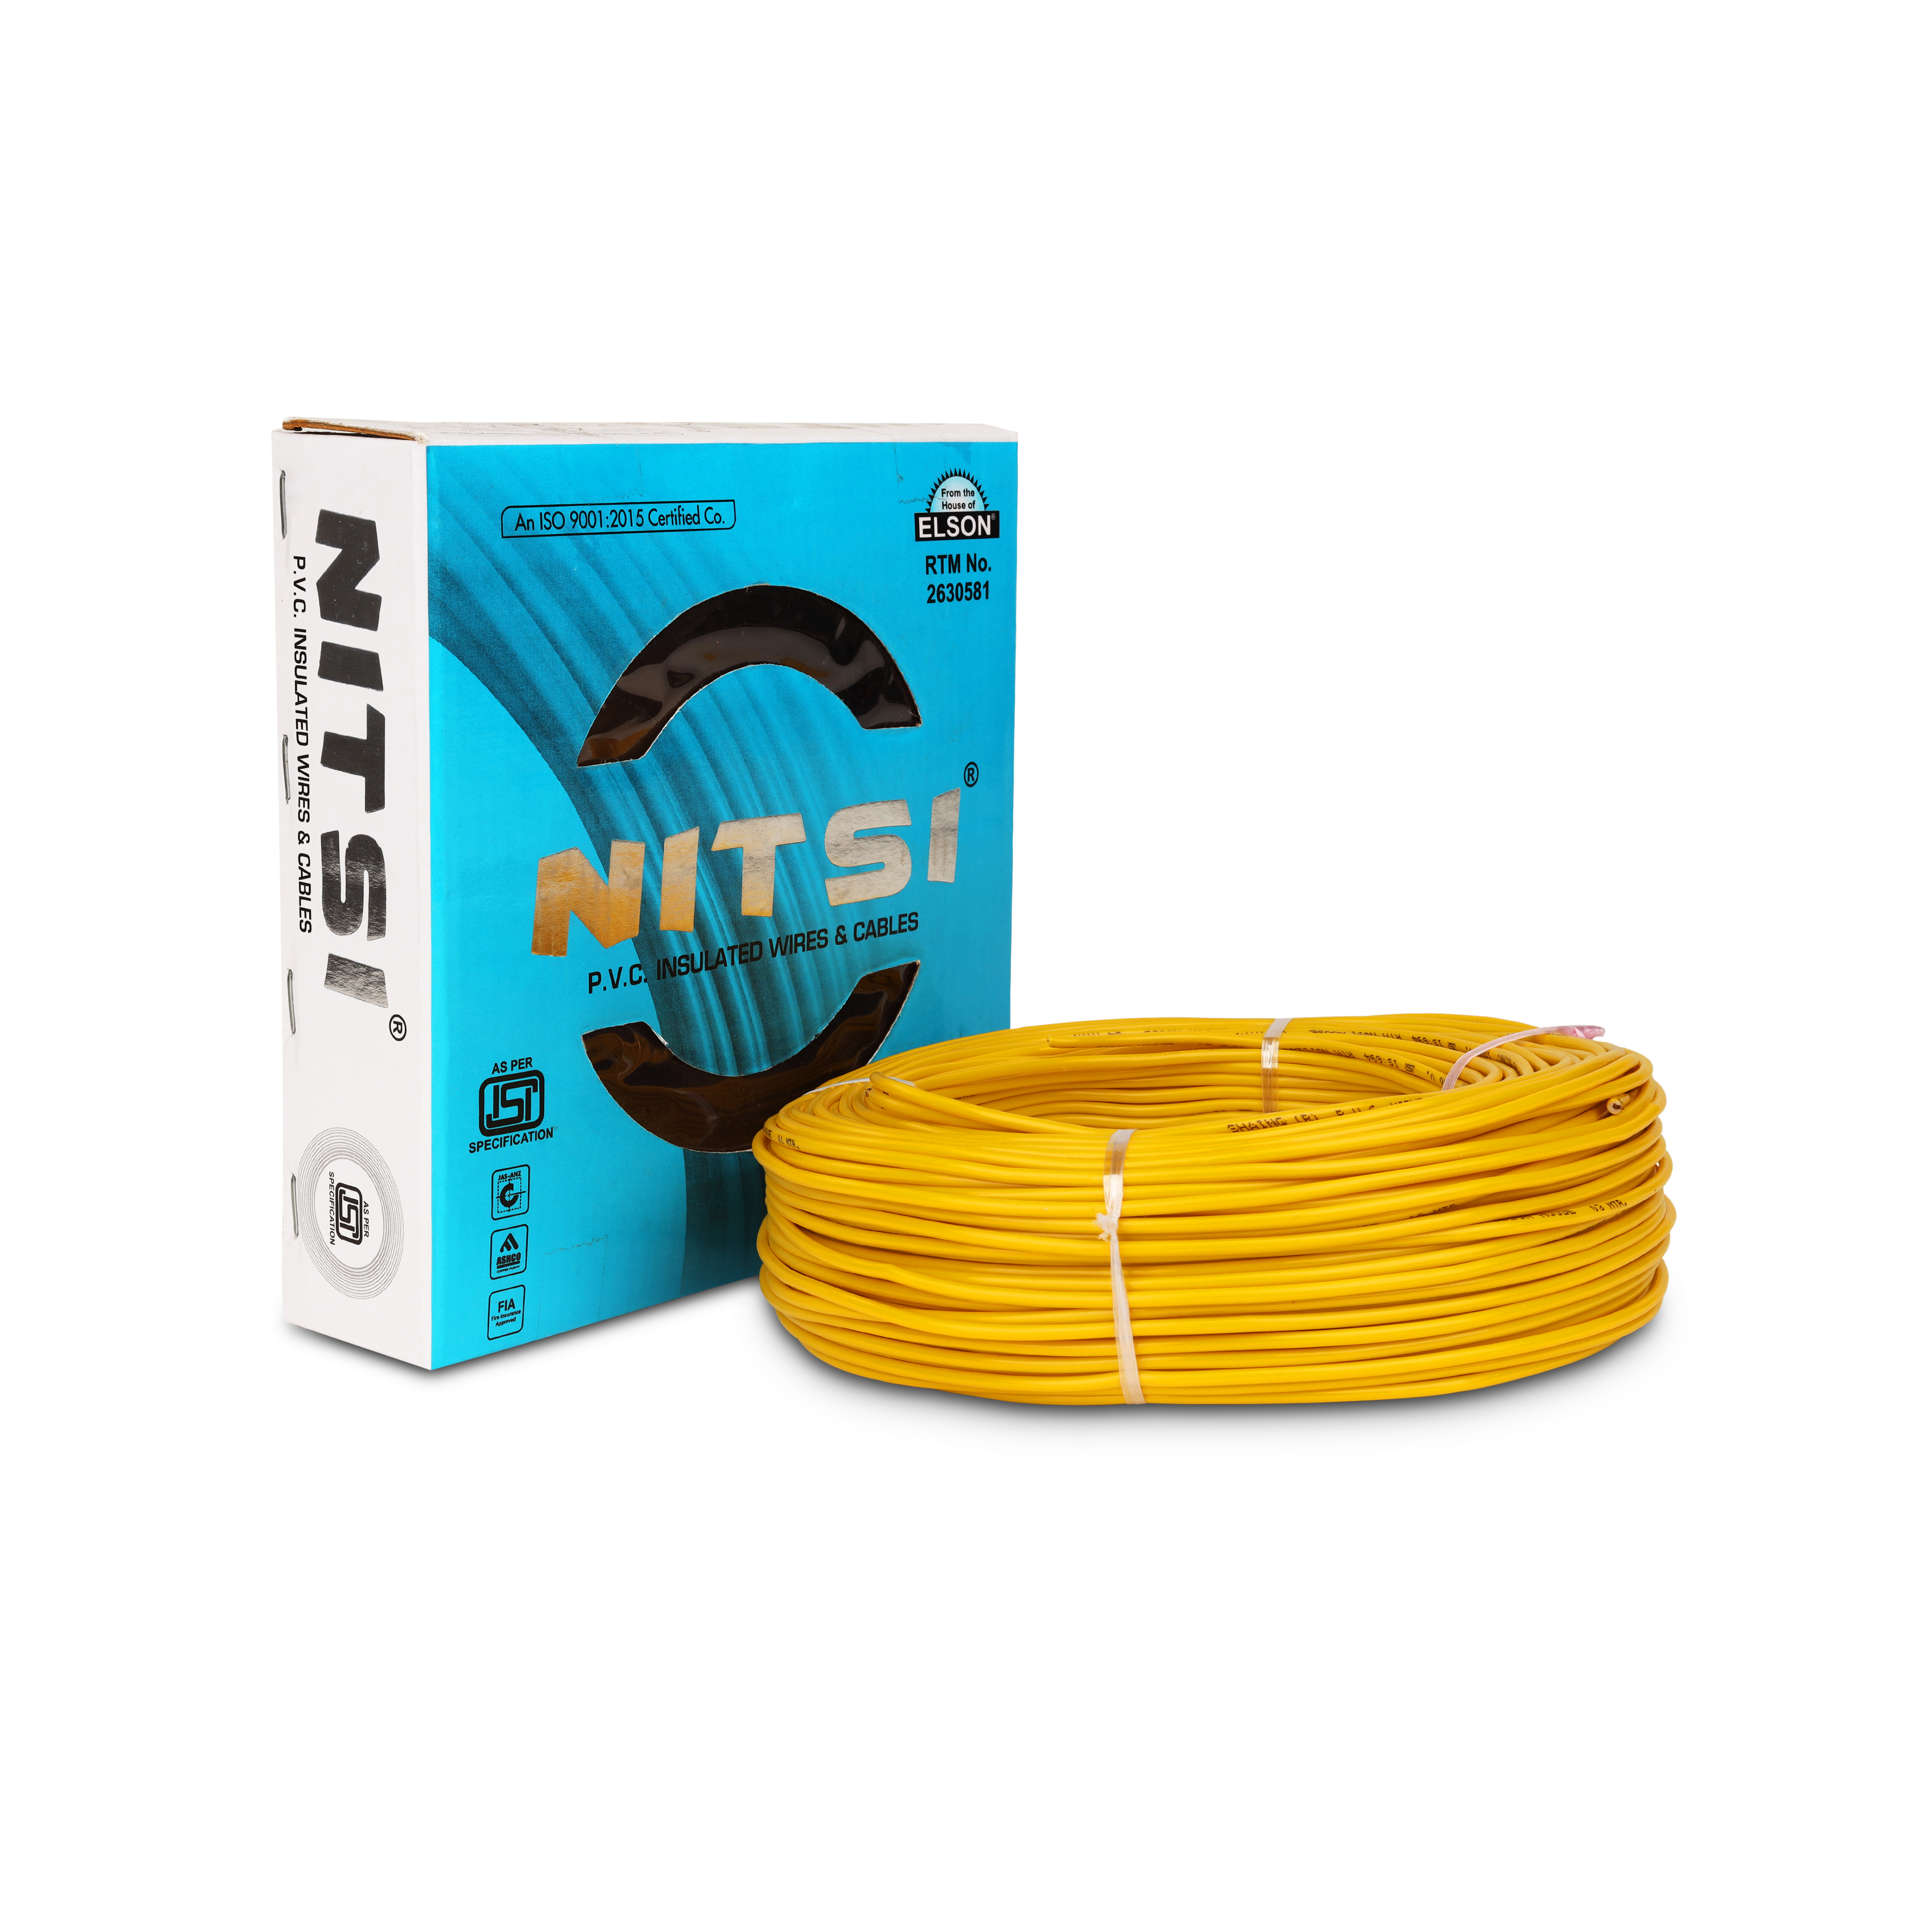 Multi strand wire 1.5 mm Manufacturers, Suppliers in Uttarakhand